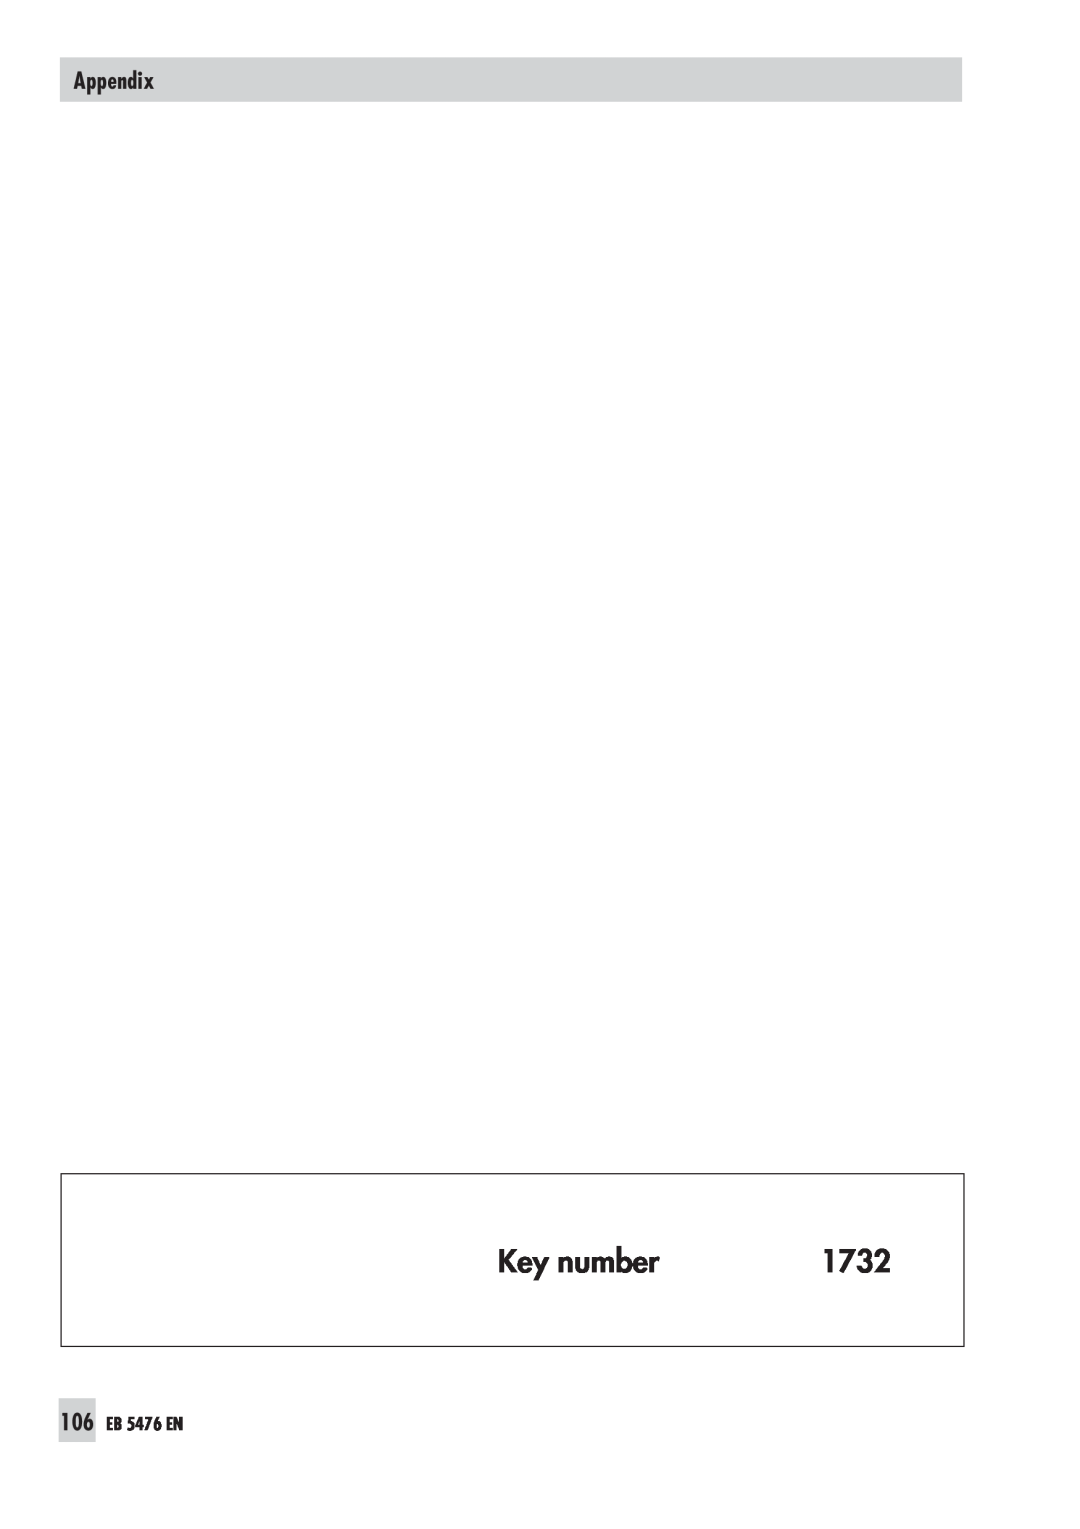 Samson manual Key number, 1732, Appendix, 106EB 5476 EN 